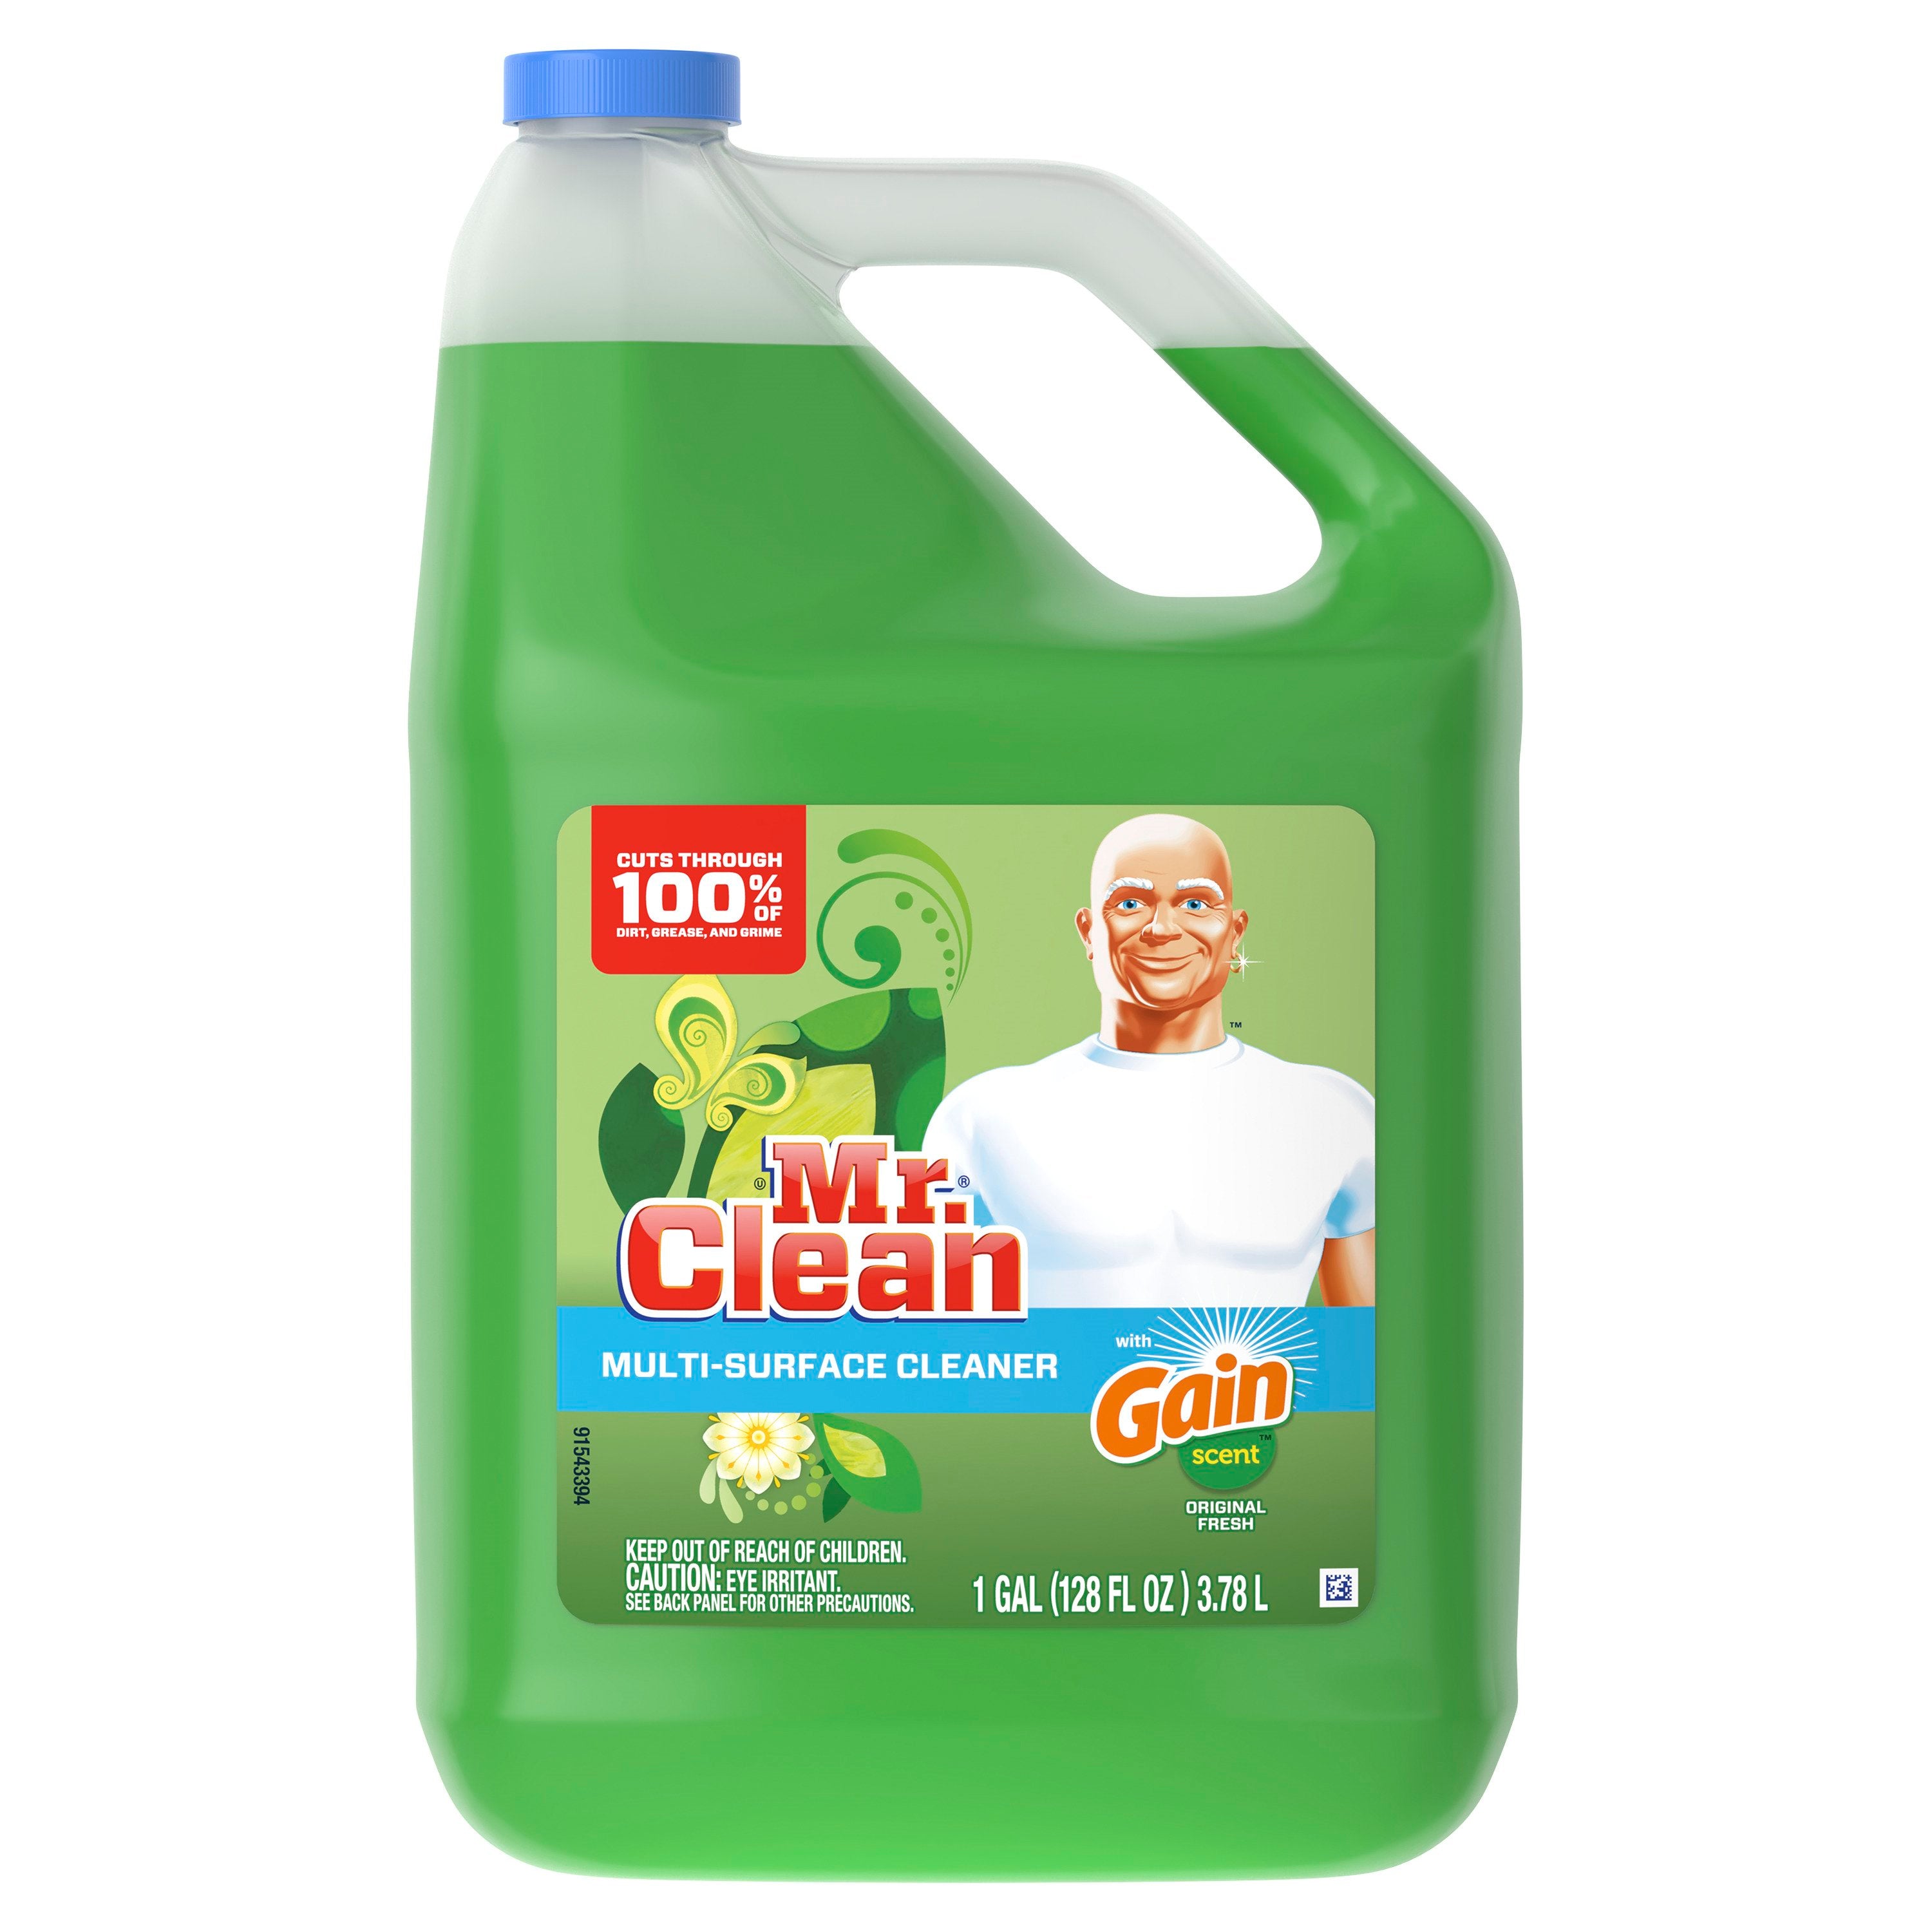 Multi-Purpose Cleaner Mr. Clean Gain Original 128oz - Case of 4